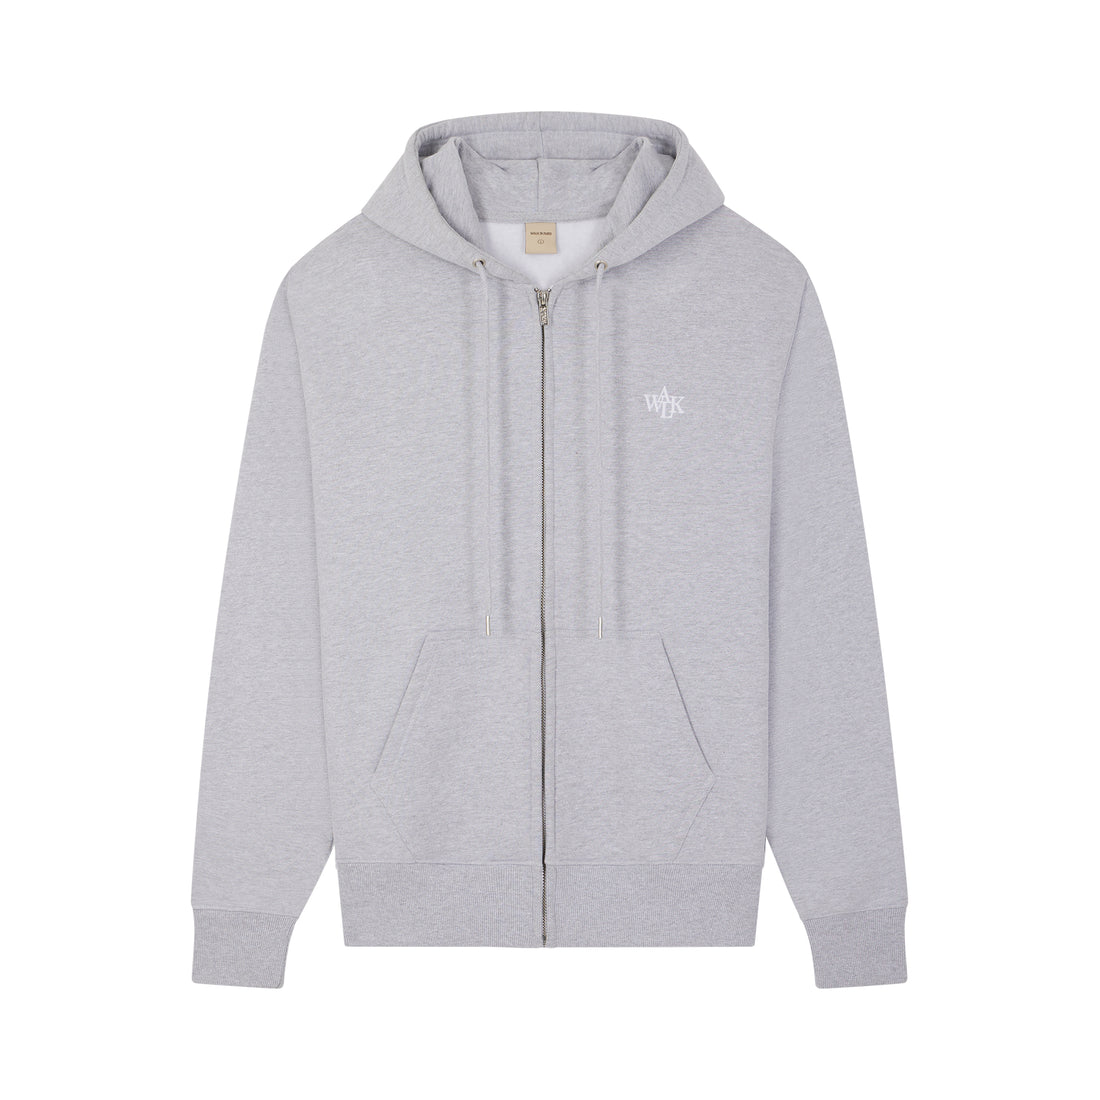 The heather grey zipped hoodie